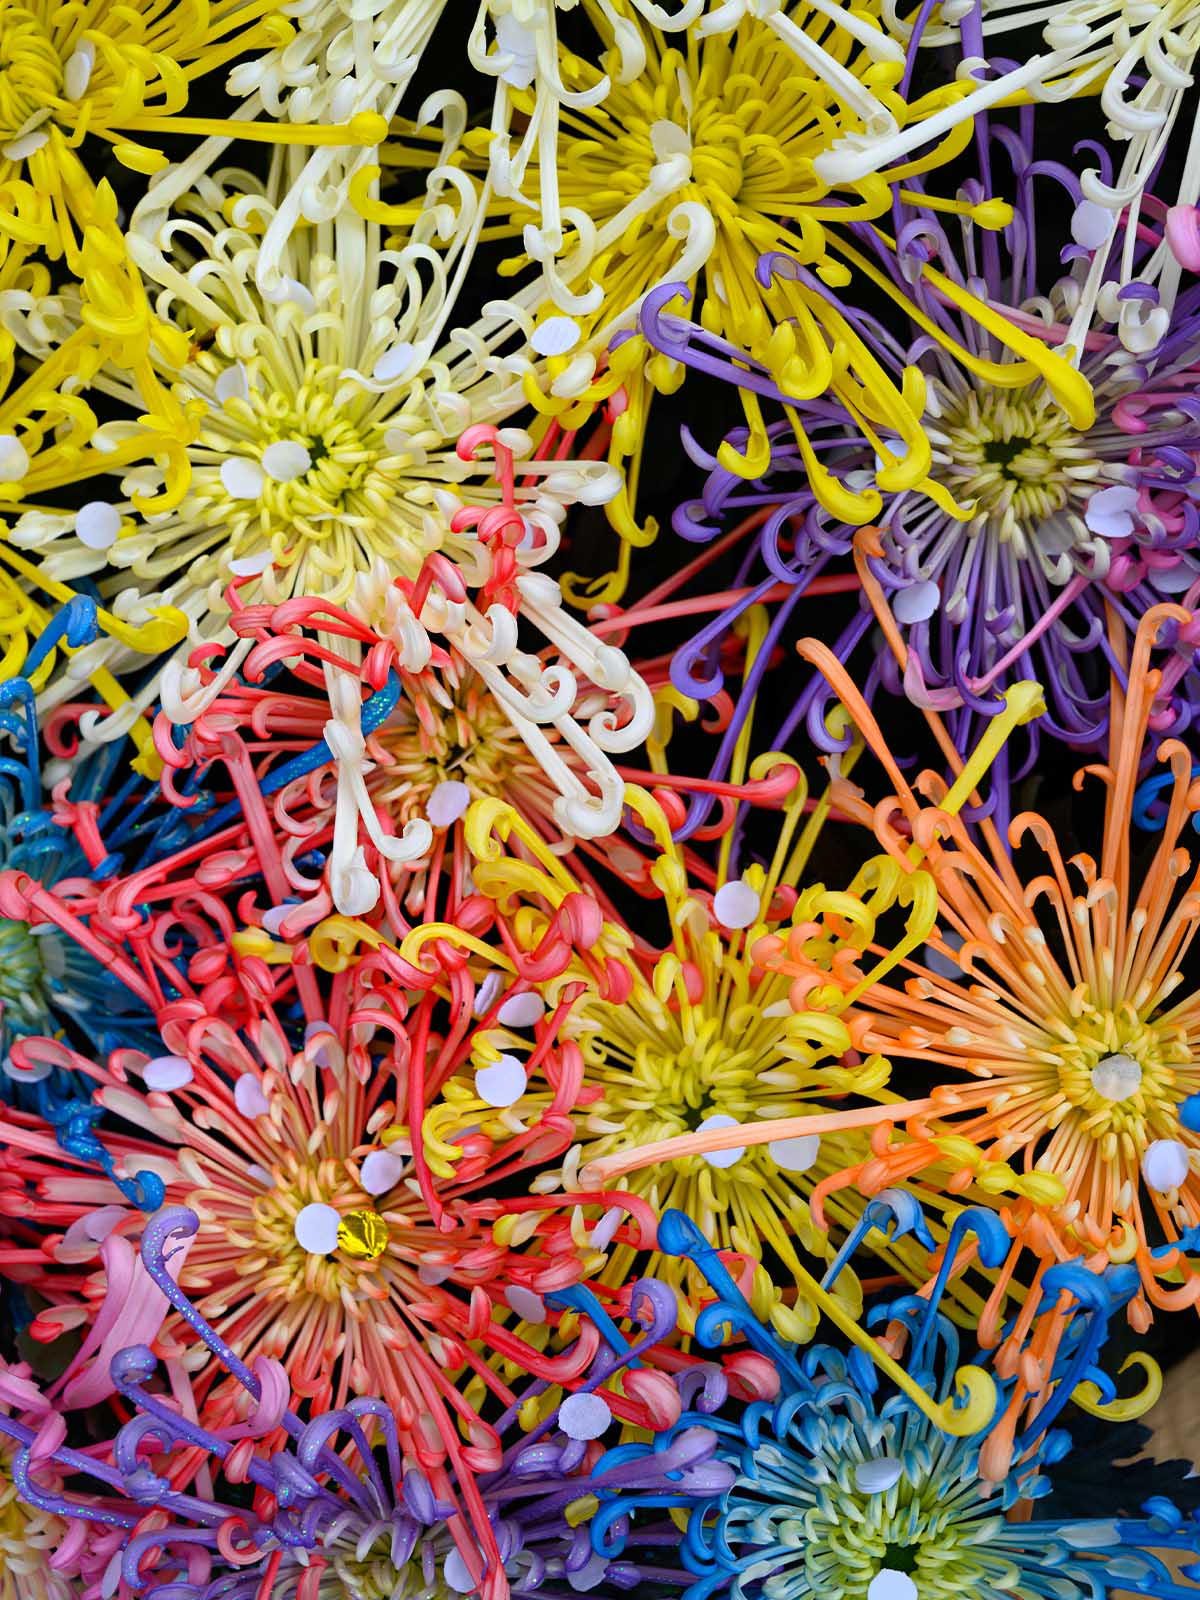 Chrysanthemum Fireworks Mix - on Thursd